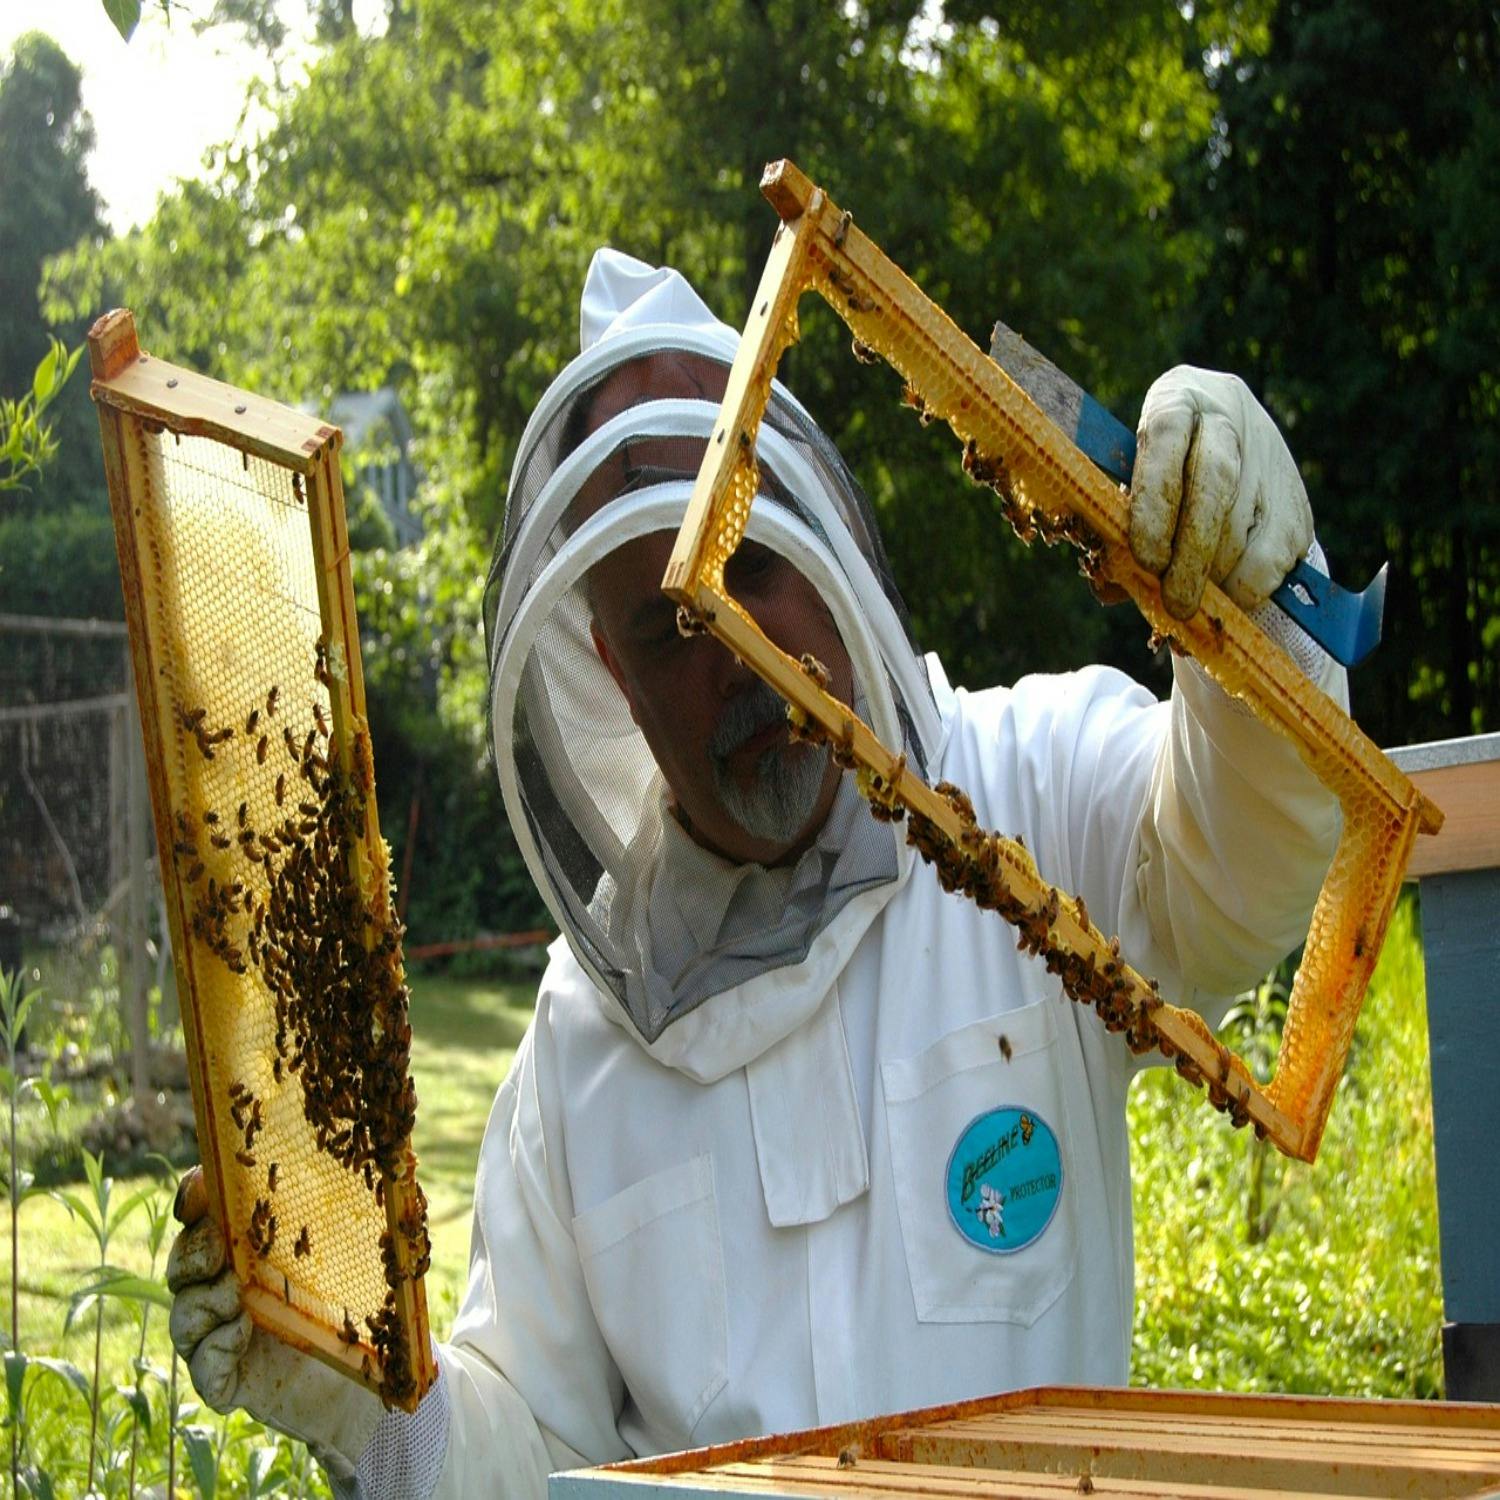 How I Live Well: Beekeeping